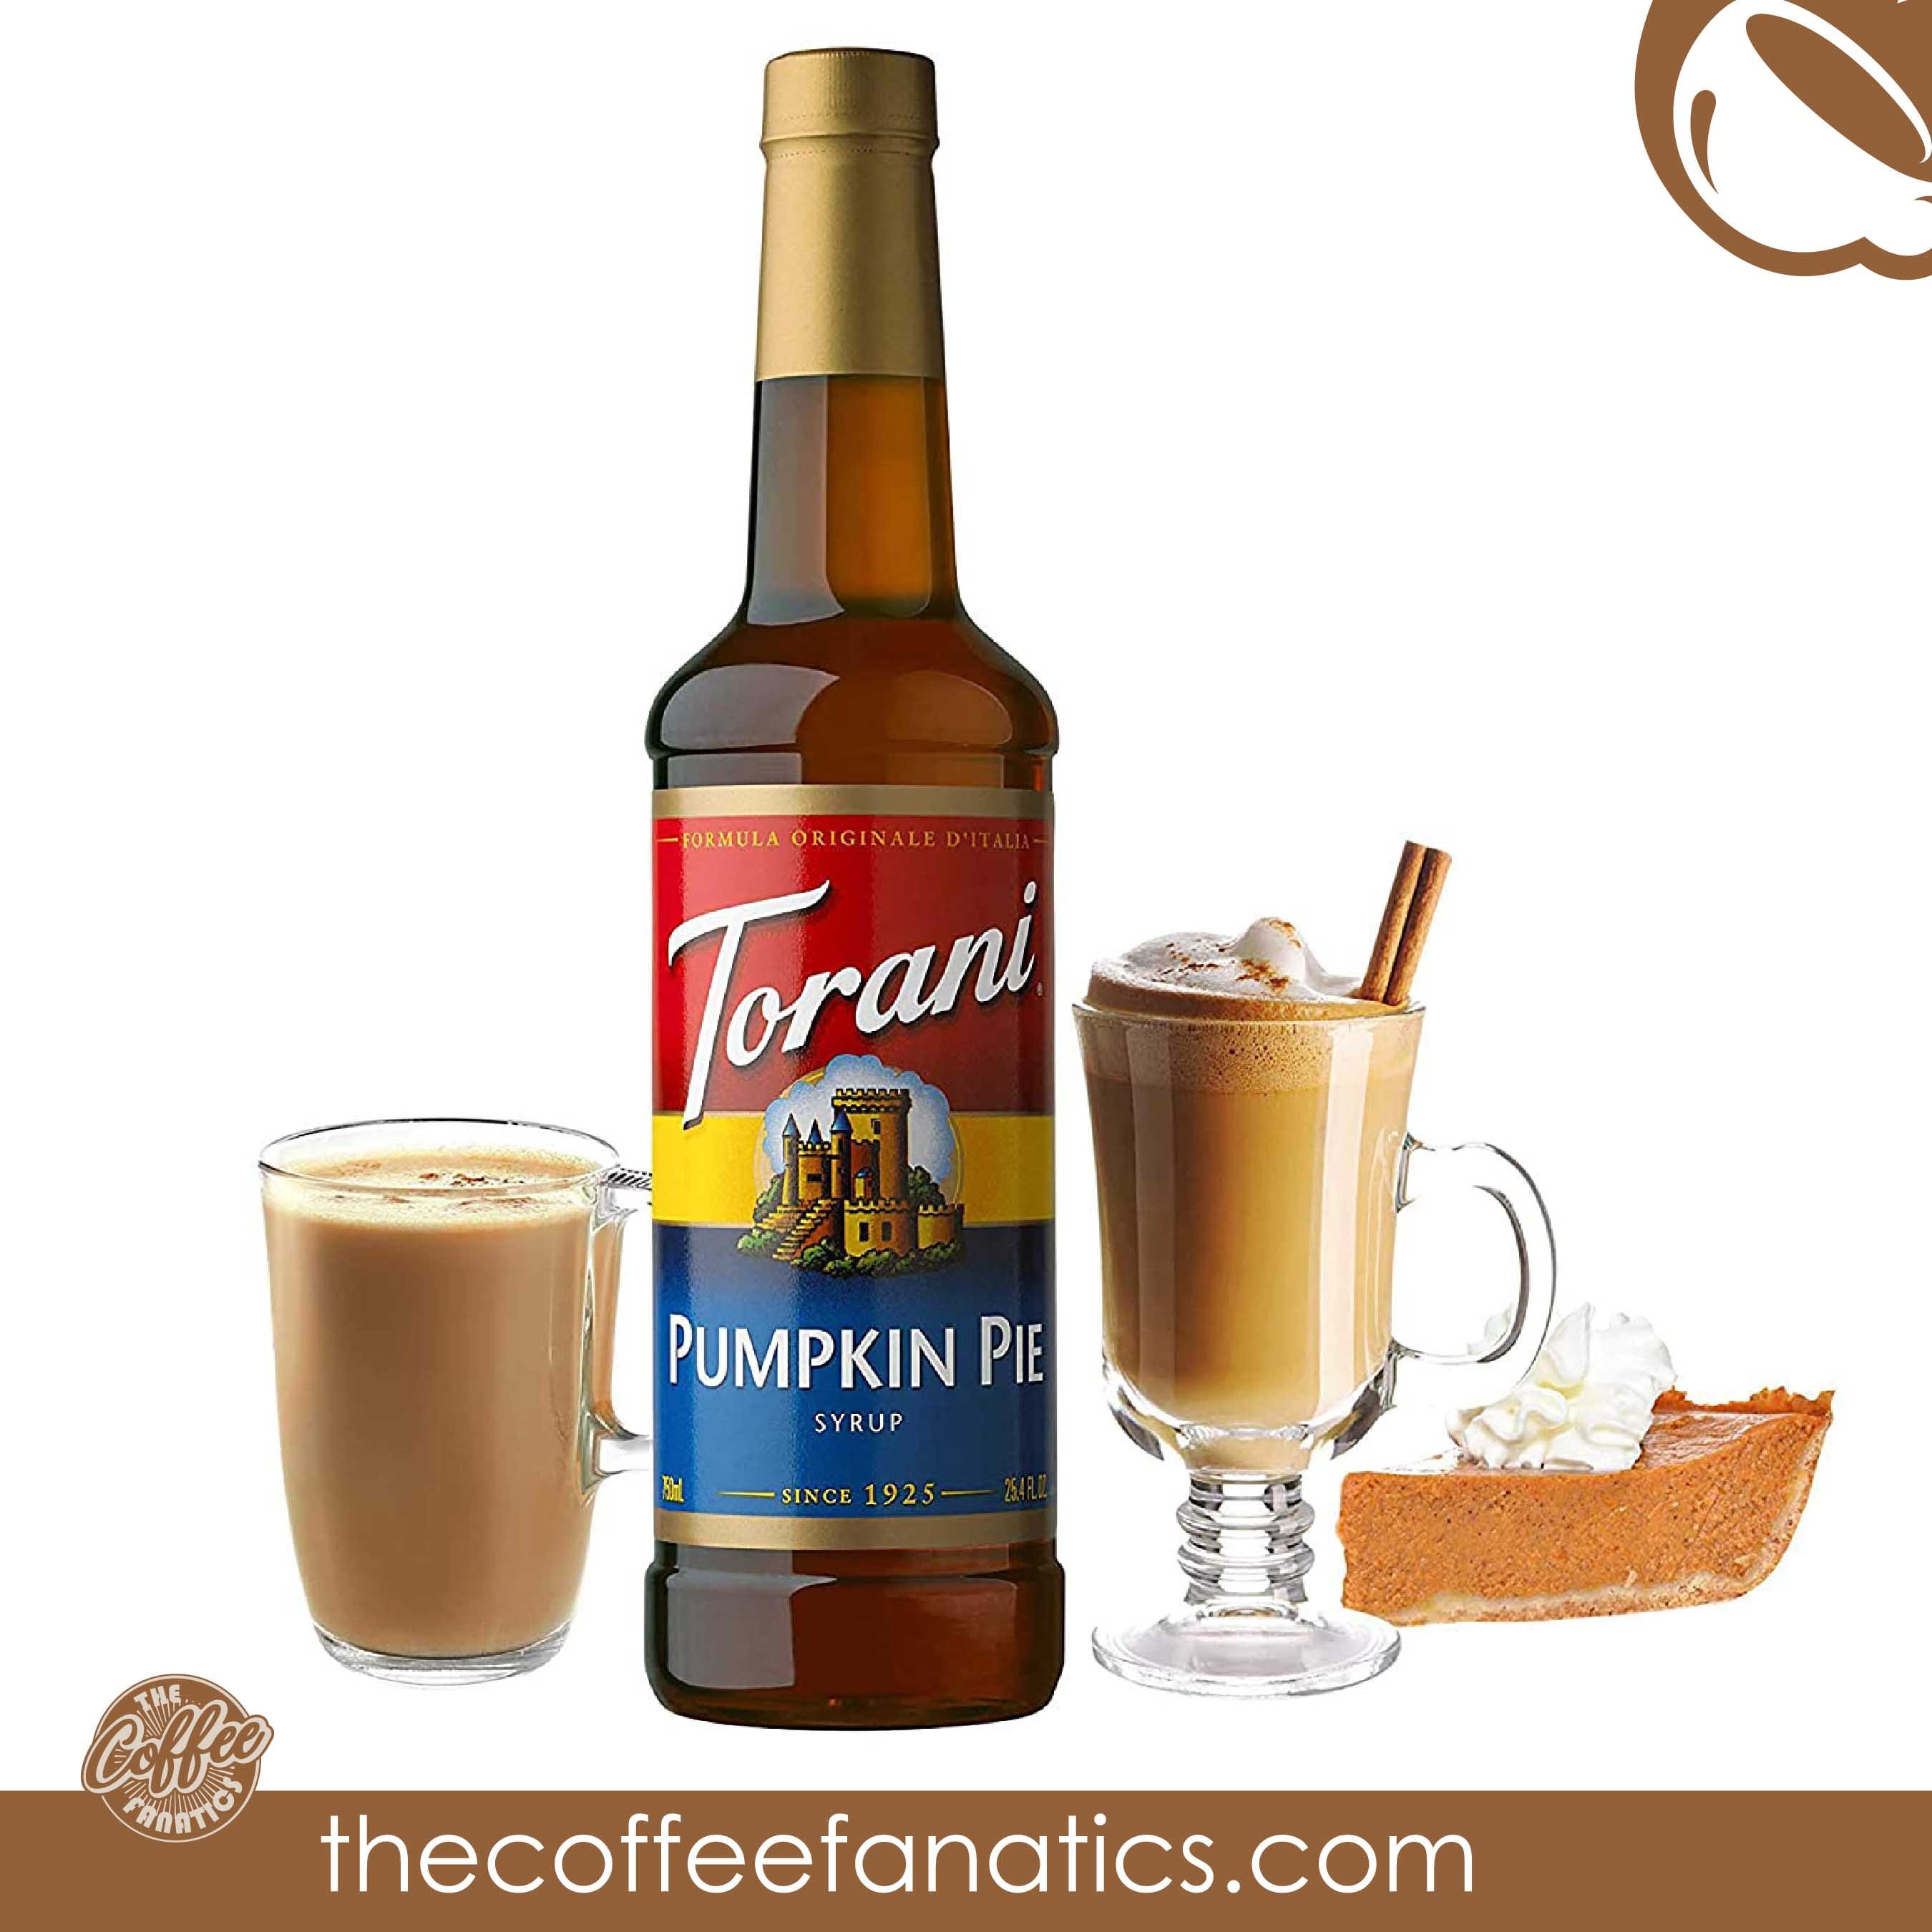 Mr. Coffee + Torani Syrups = Iced Coffee Heaven